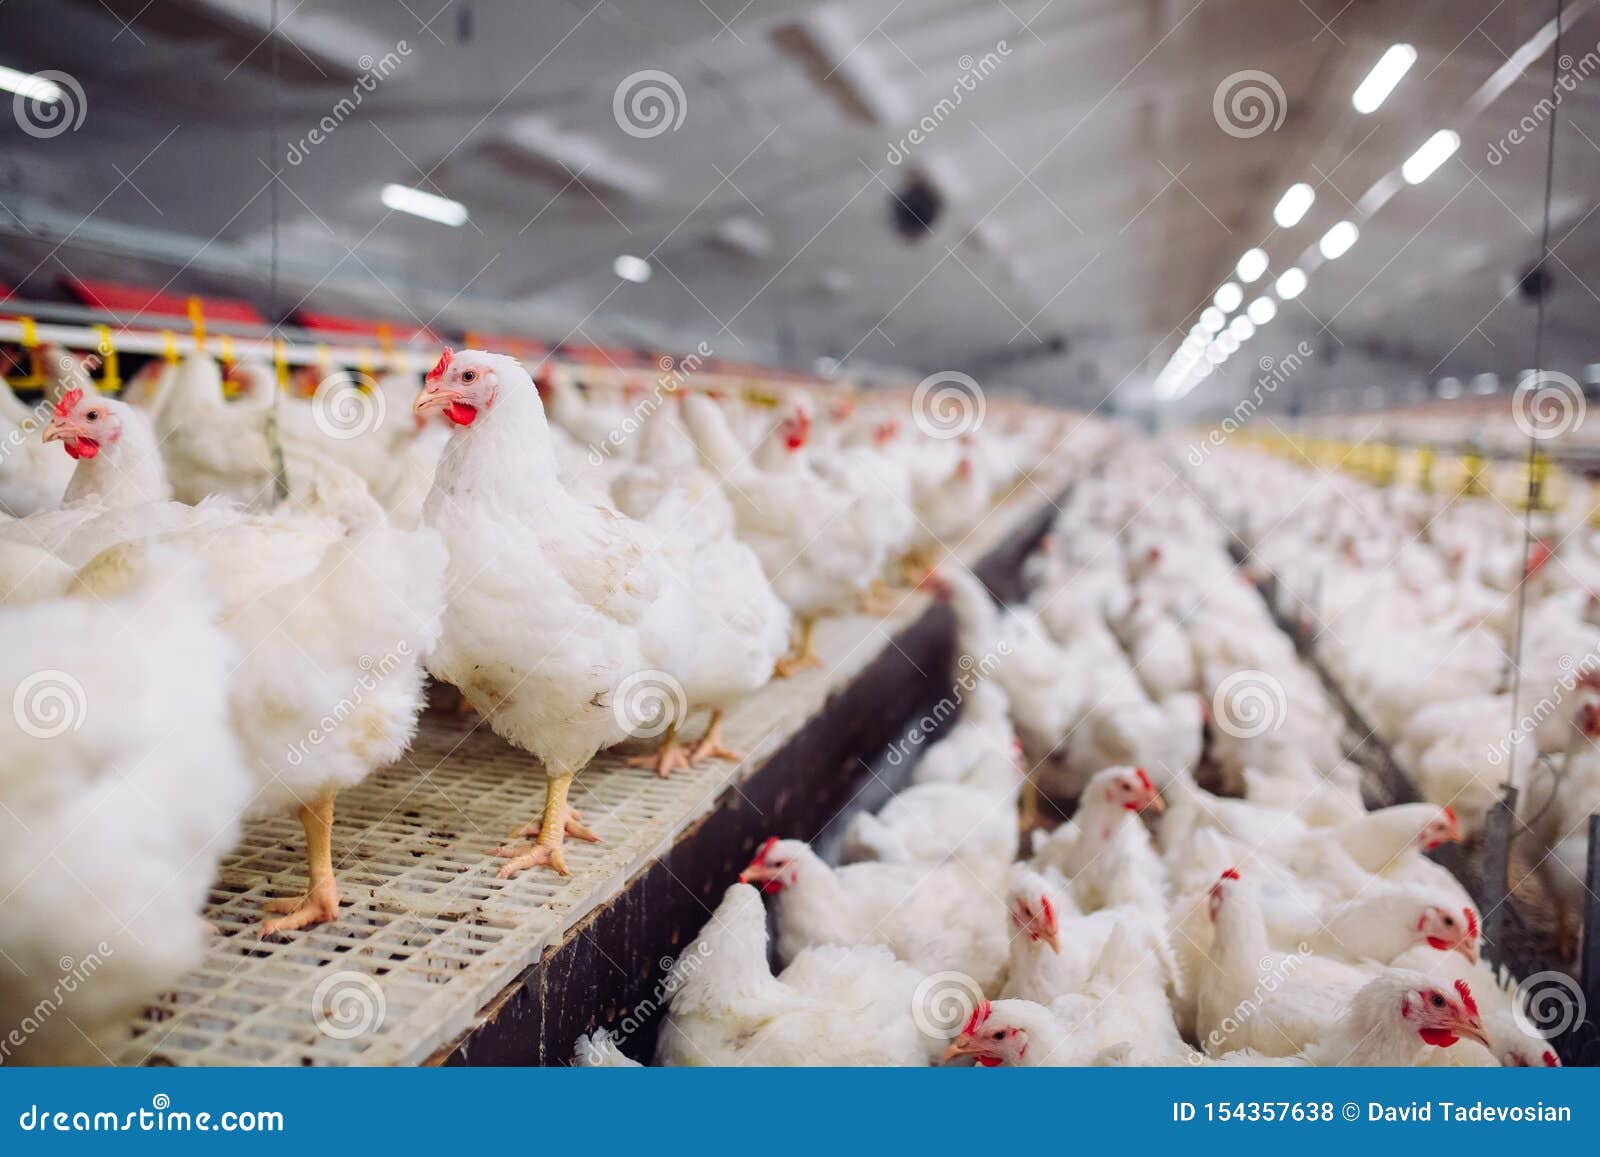 big chicken farm broiler chickens